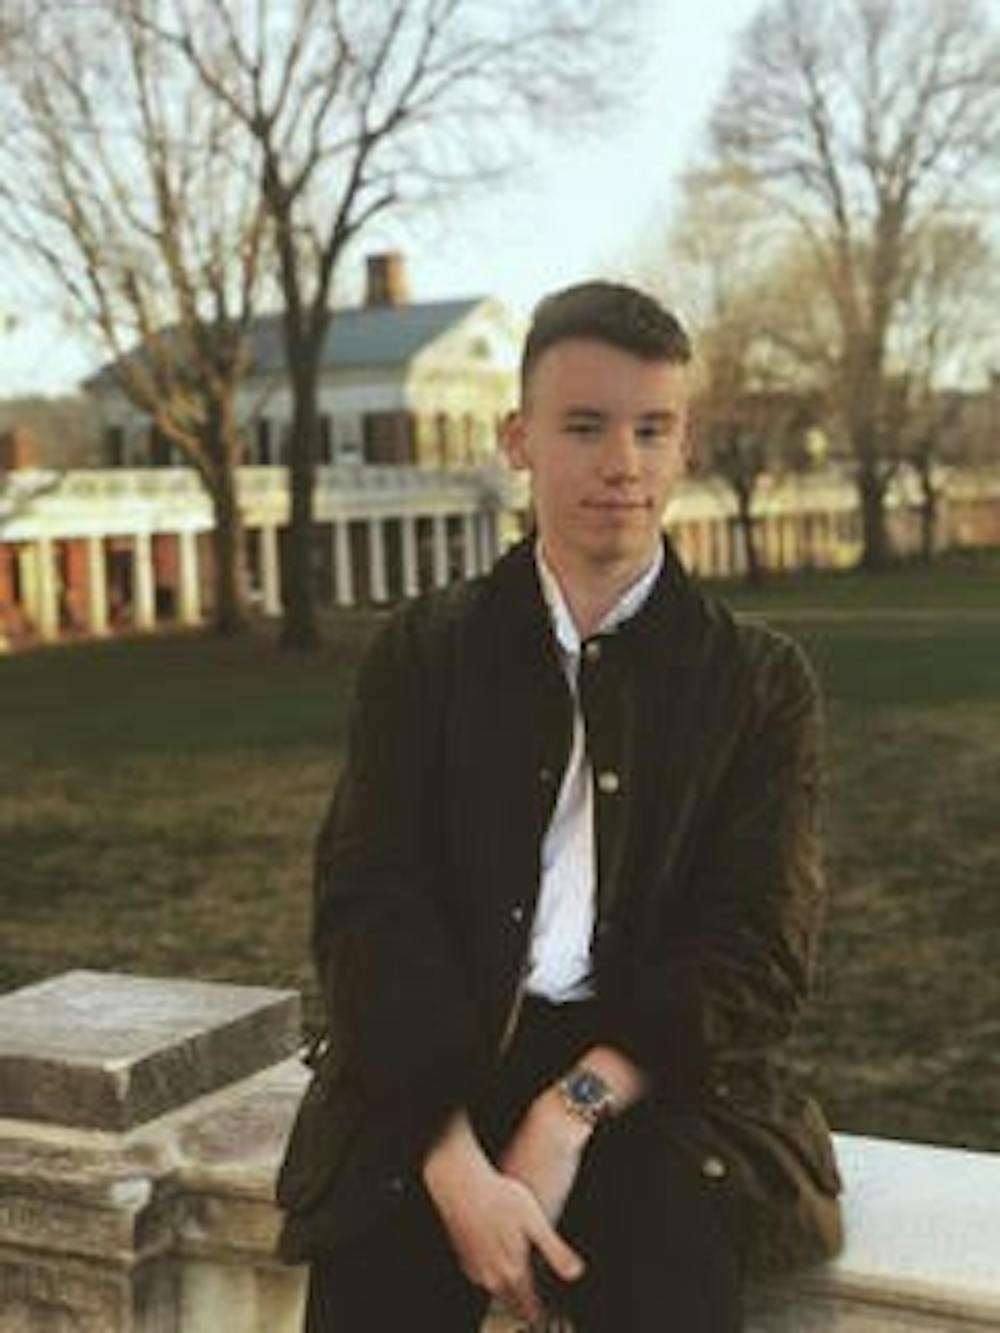 Second-year College student Hunter Wagenaar started the organization last summer.